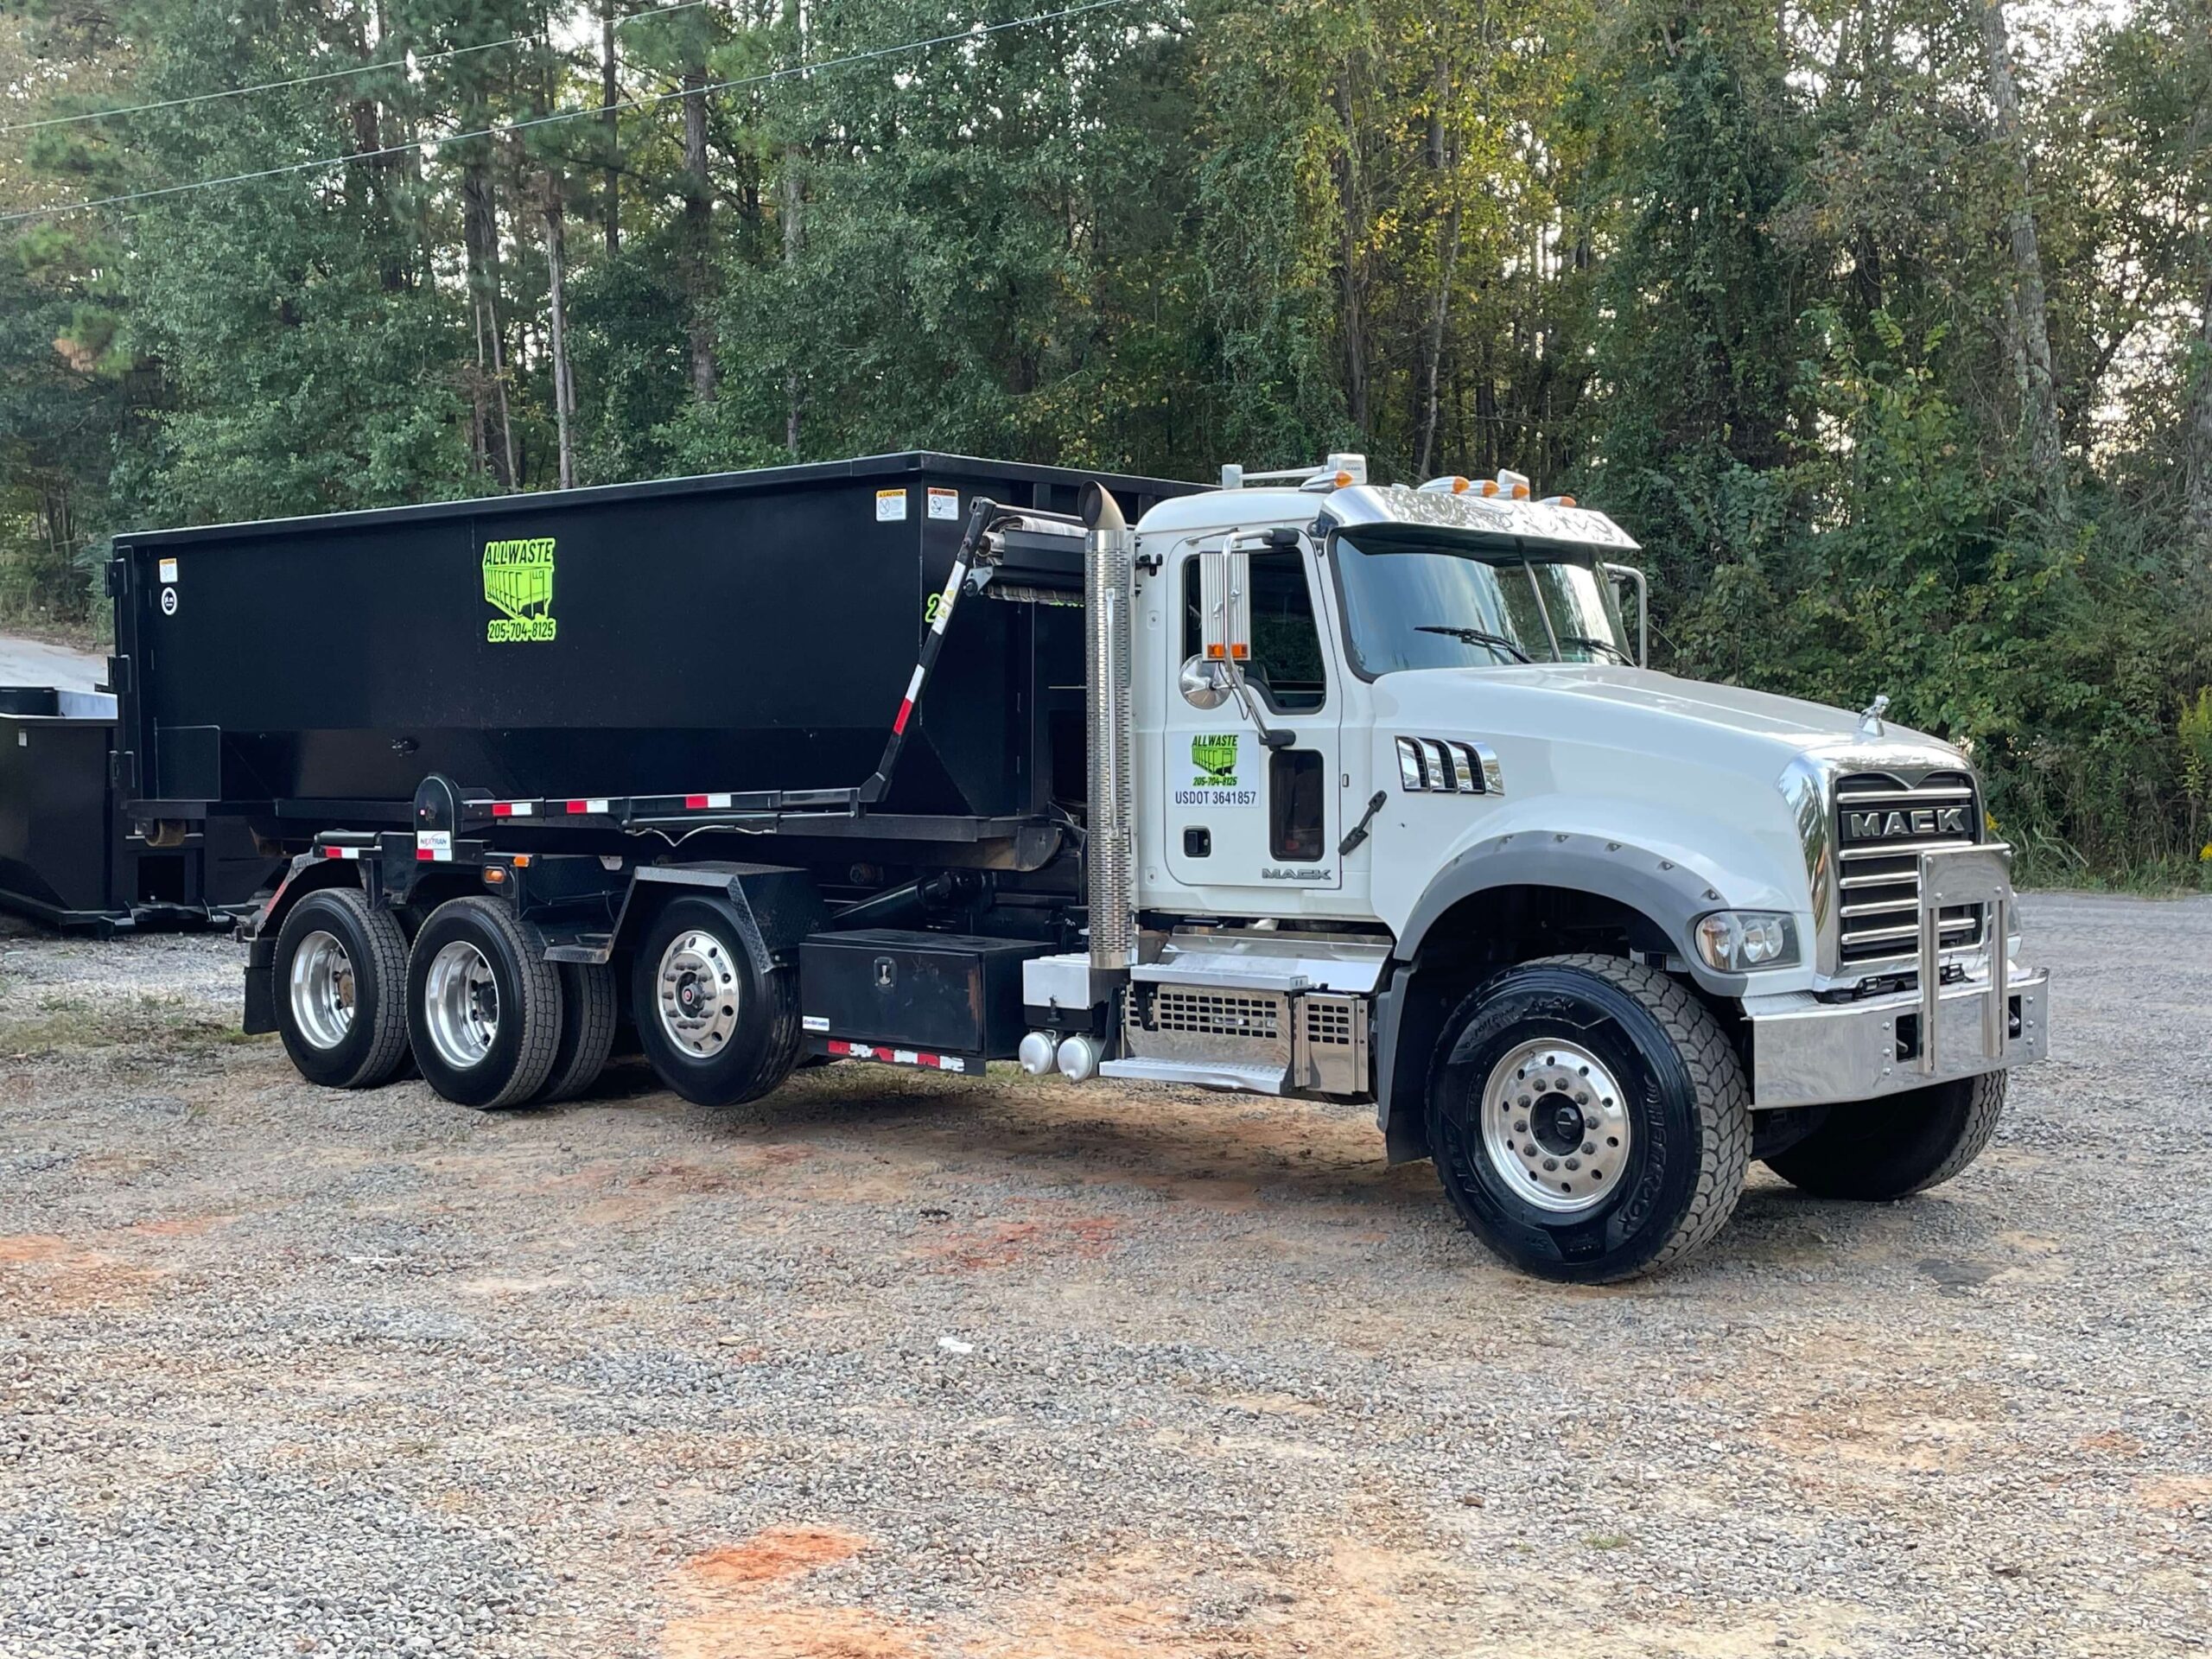 Dumpster Truck - All Waste Roll Off Dumpsters, serving Birmingham, Alabama Area